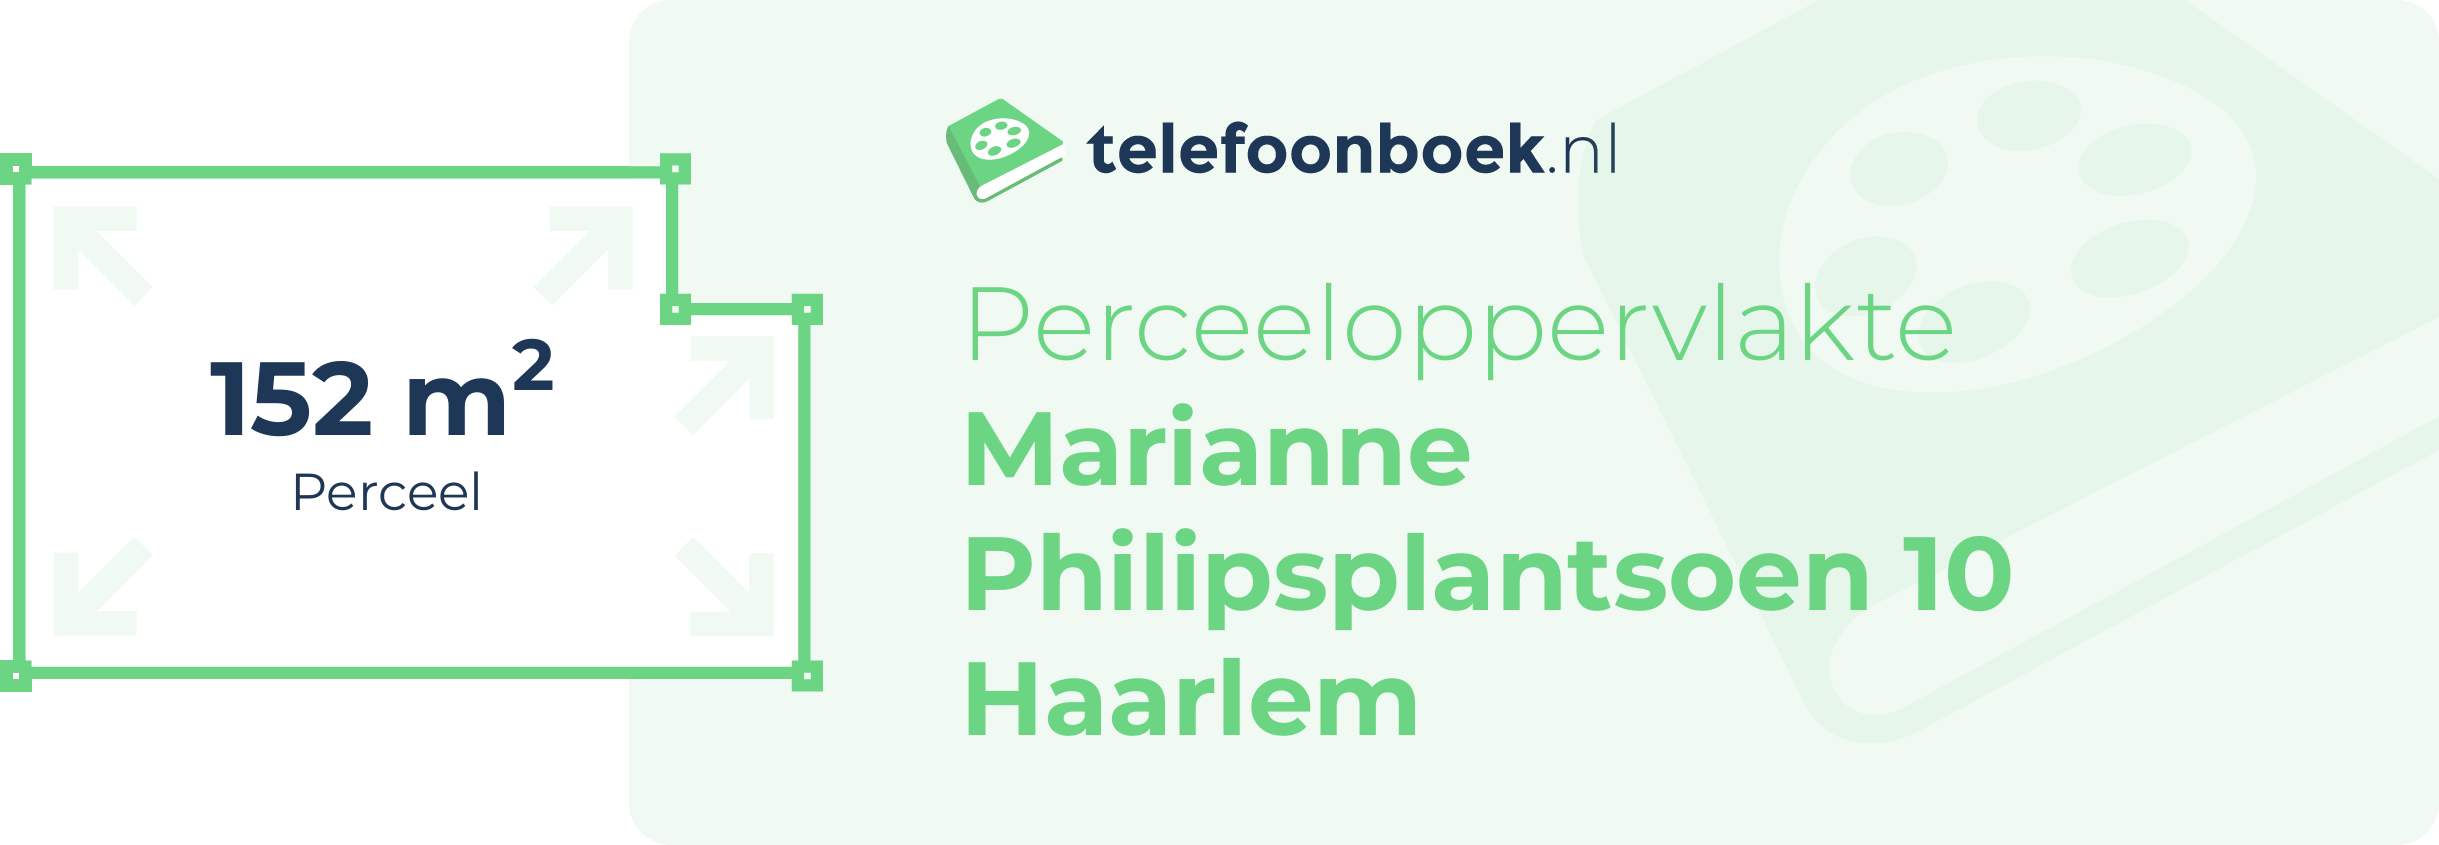 Perceeloppervlakte Marianne Philipsplantsoen 10 Haarlem